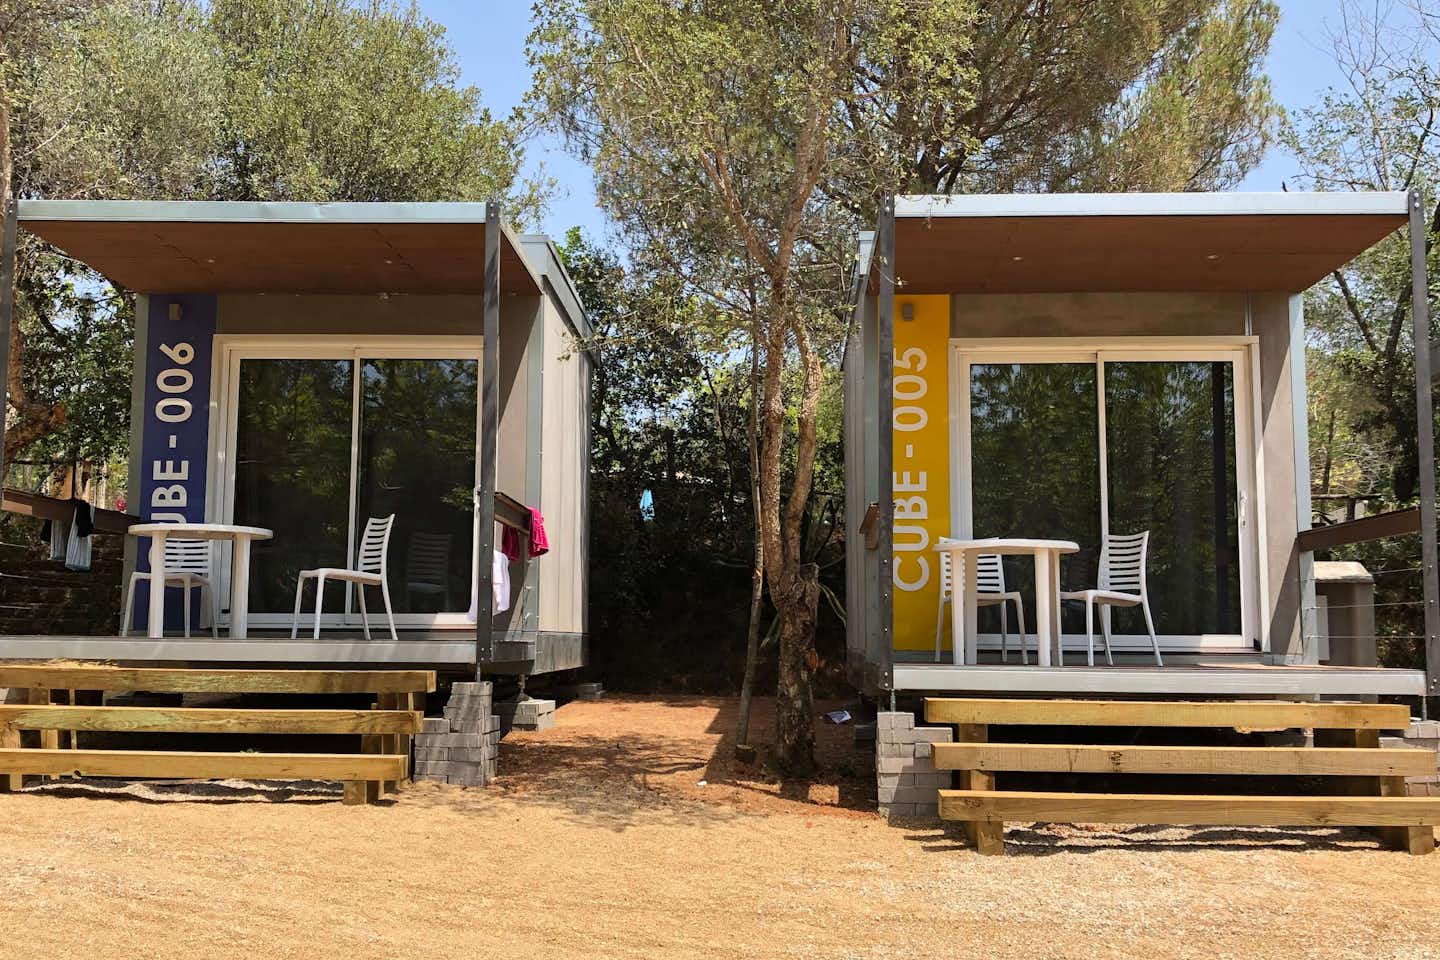 Camping Castell Park - Mobilheime mit Veranda im Grünen auf dem Campingplatz